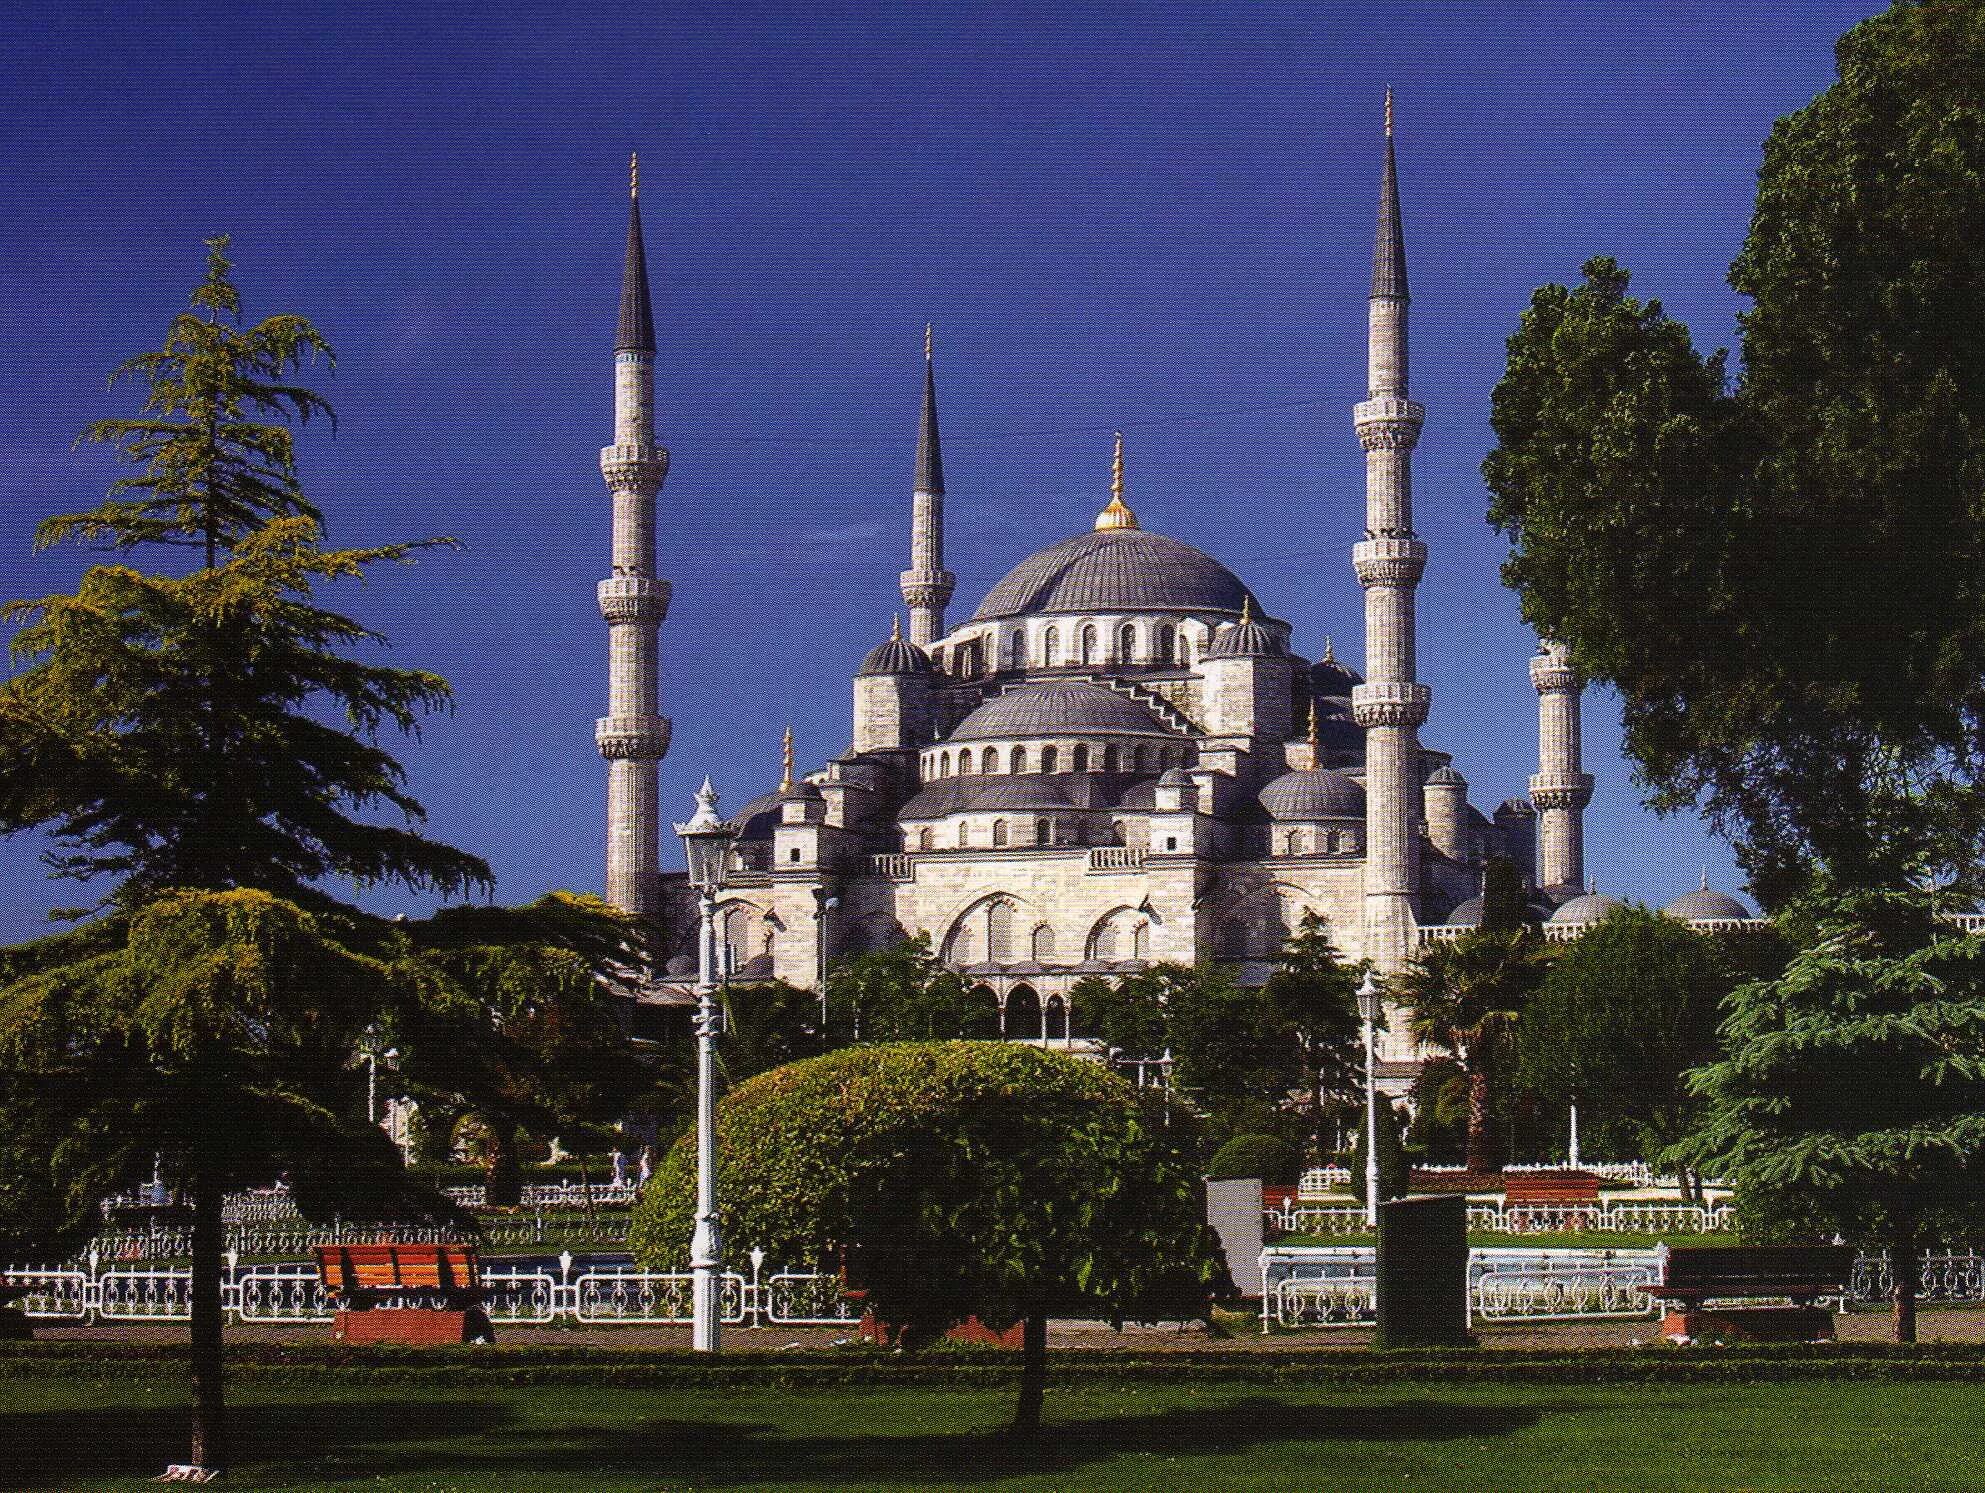 Фатих султанахмет. Турция, Стамбул, мечеть Султанахмет. Голубая мечеть (мечеть Султанахмет). Турция достопримечательности Стамбула голубая мечеть.